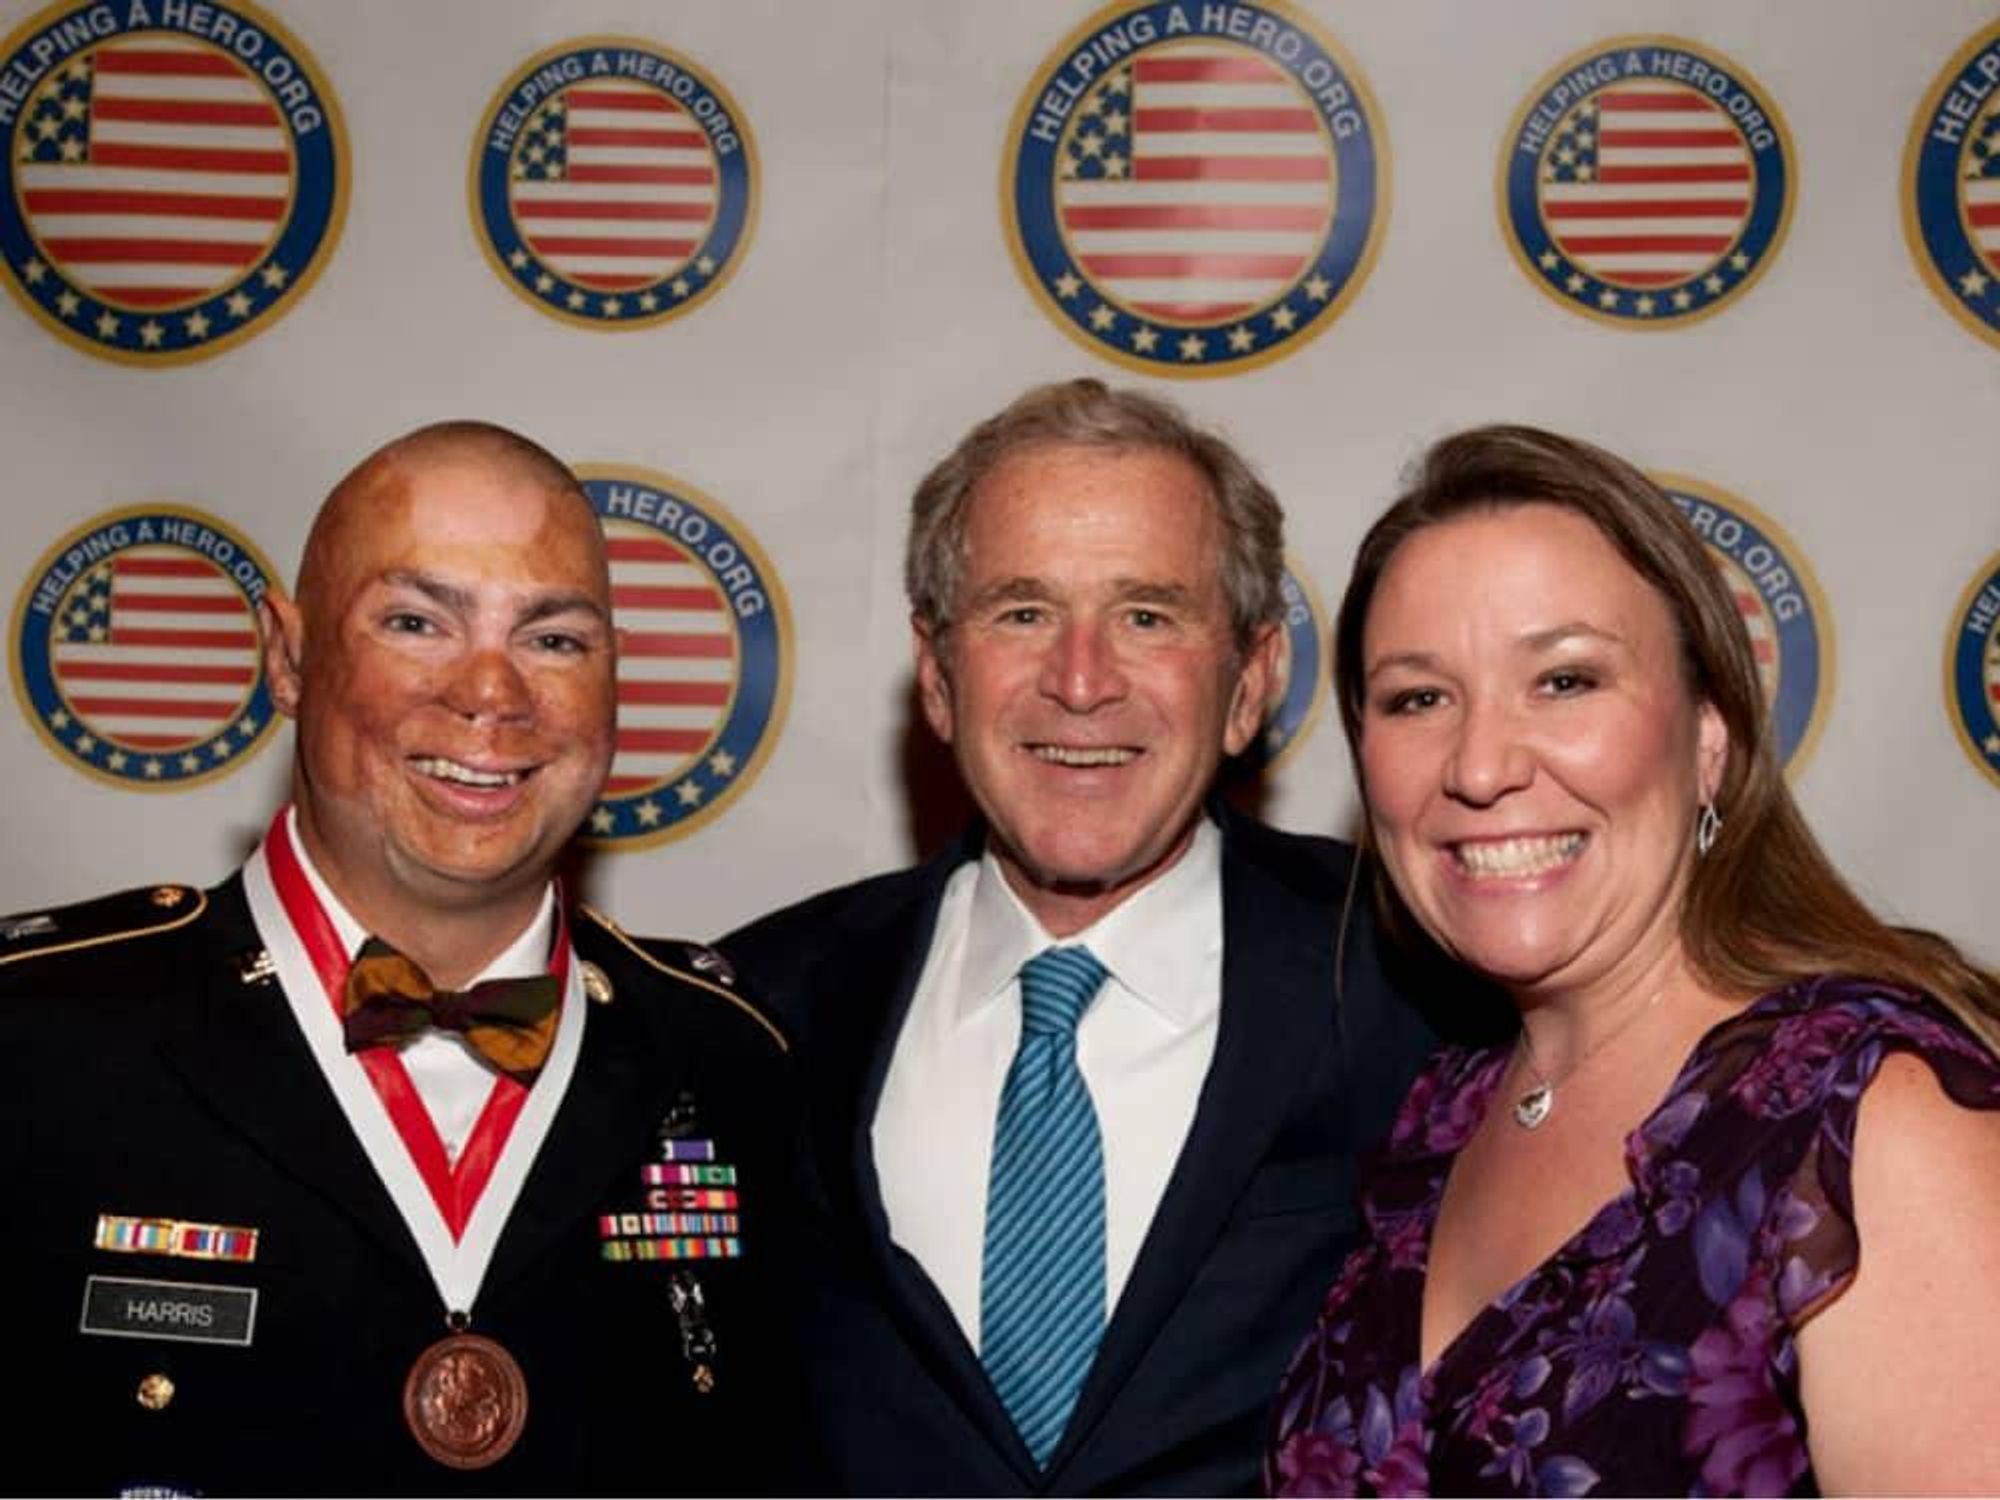 Helping a Hero George W Bush soldier